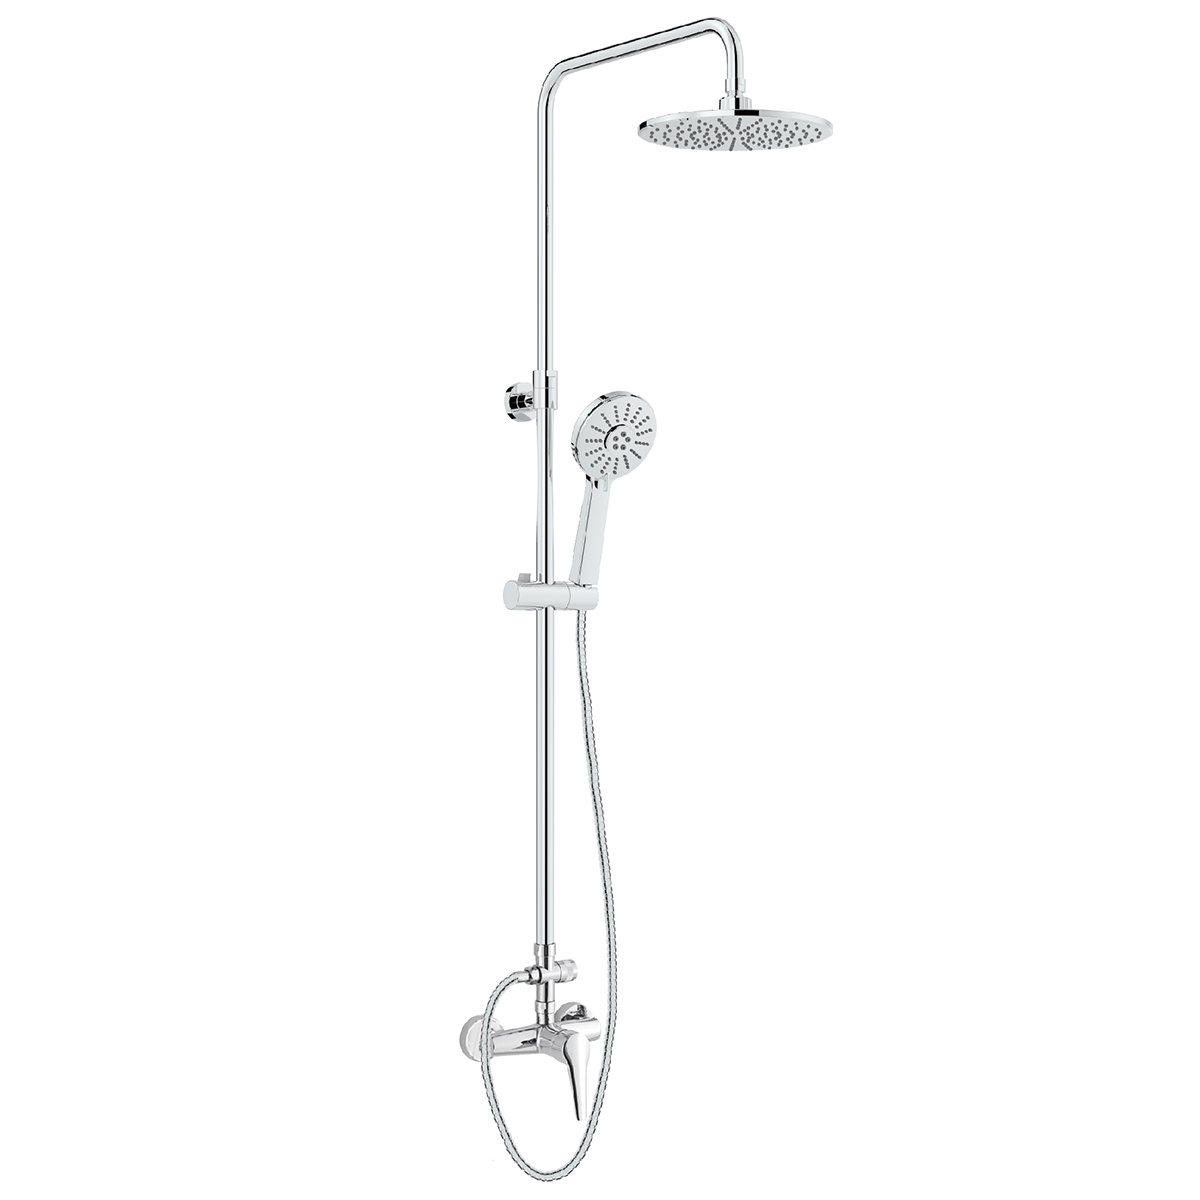 Super Purchasing for Bathroom Faucets - Shower fixtures L1401 shower column – Sinyu